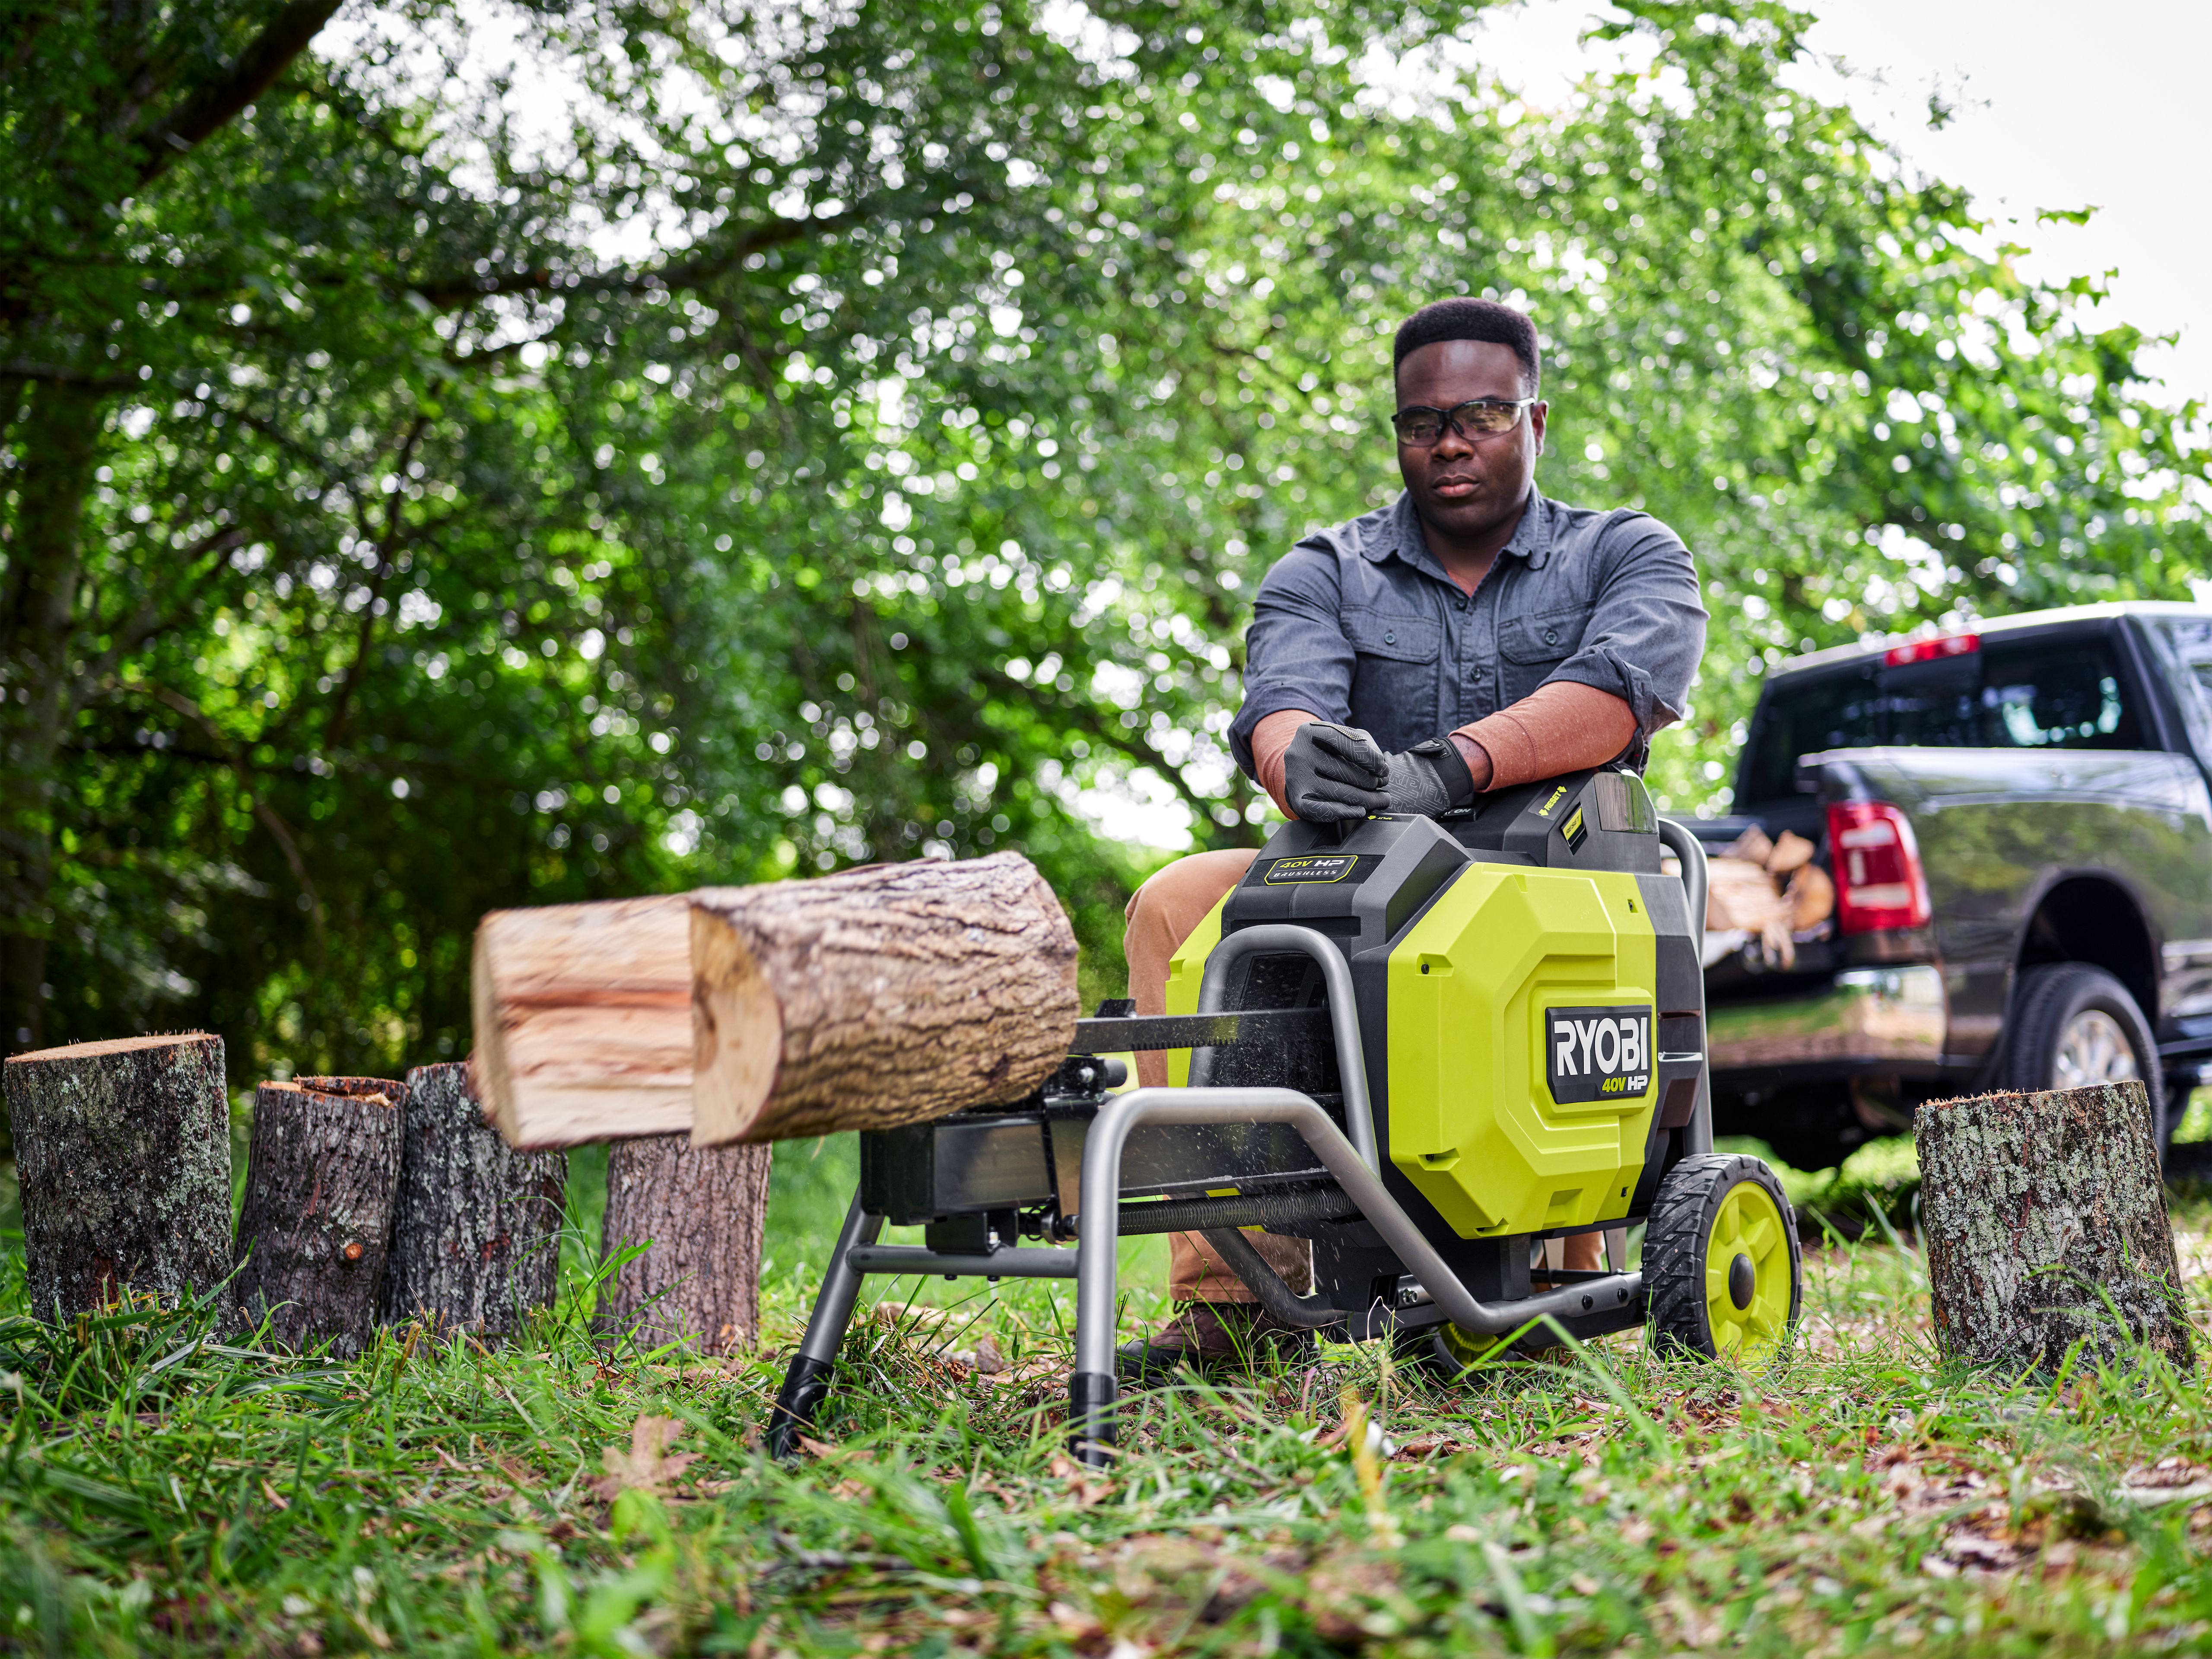 Labor-saving Outdoors Wood Splitter Firewood Splitter Wood Chopper Log  Splitter